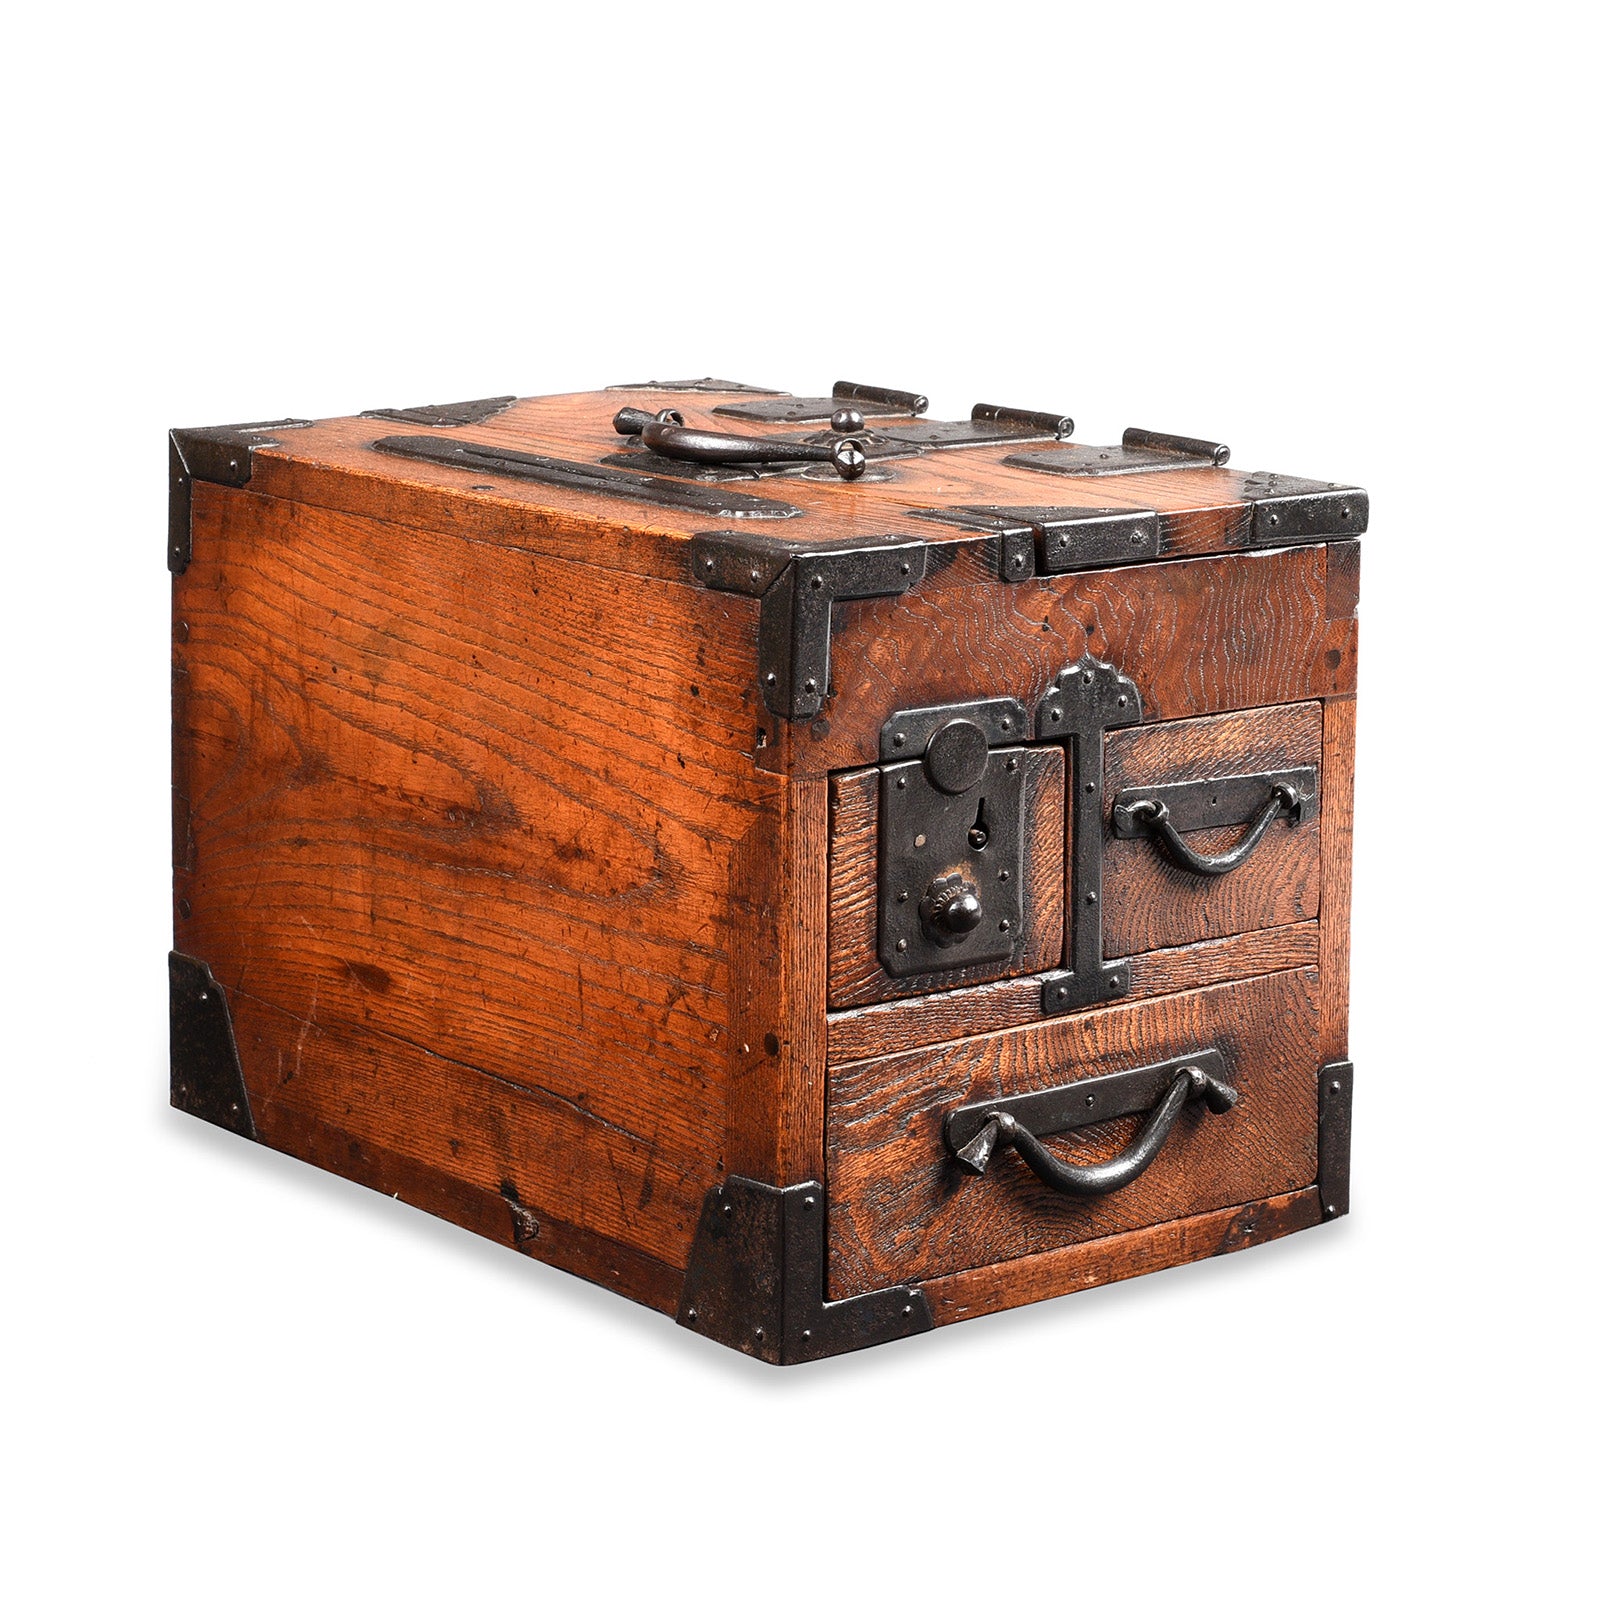 Antique Japanese Keyaki Zenibako Money Box, Edo Period - 19thC | Indigo Antiques